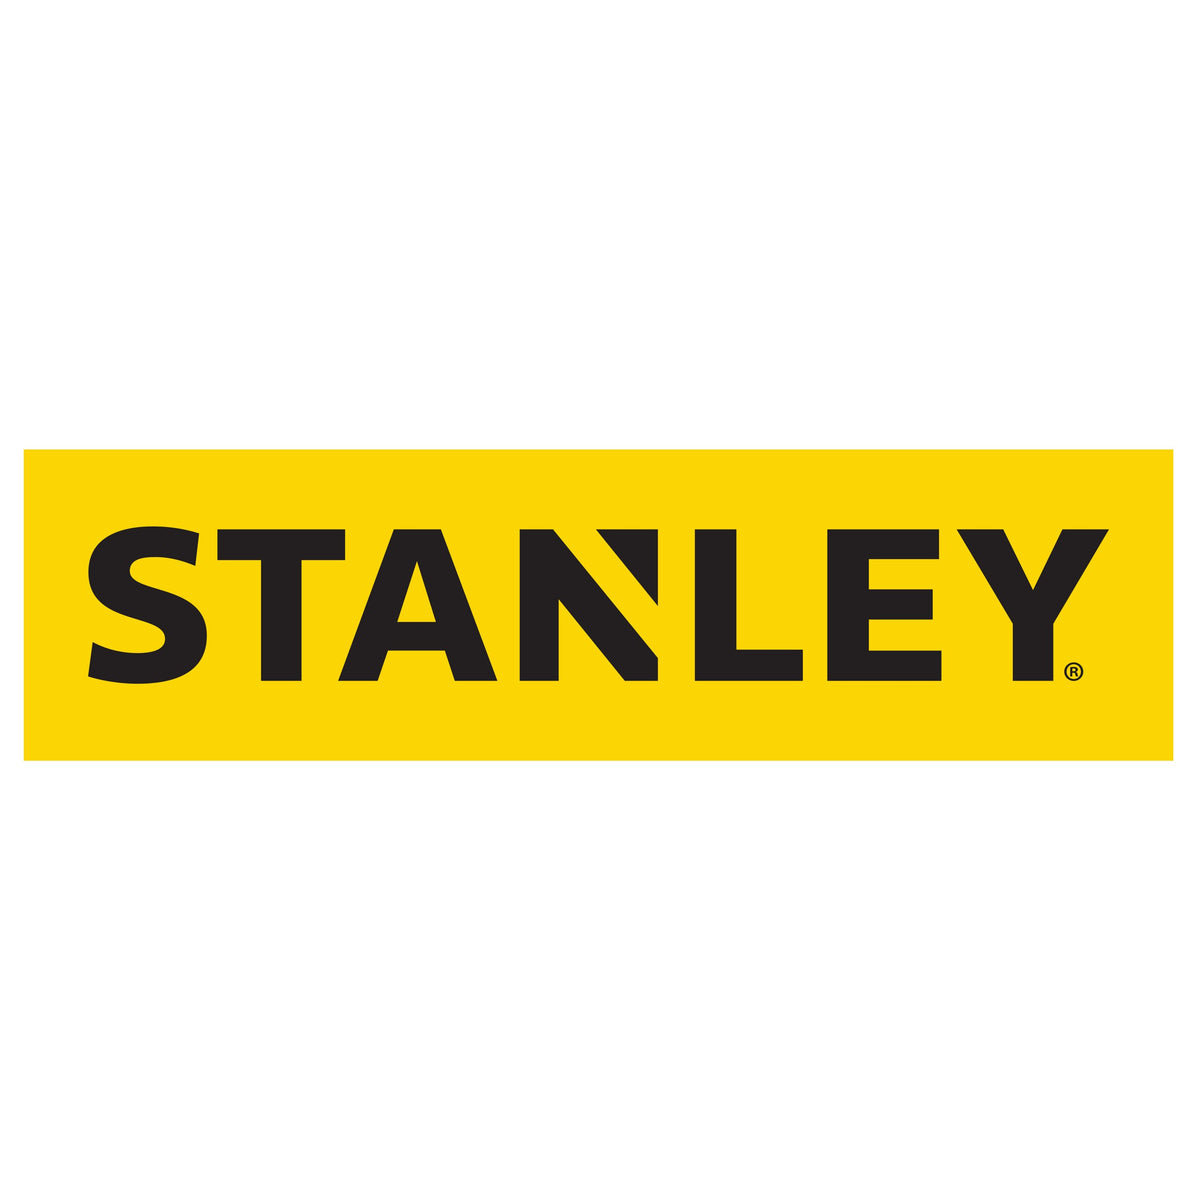 Aspiradora tambor amarilla 750 w. Stanley  I309SL18135P